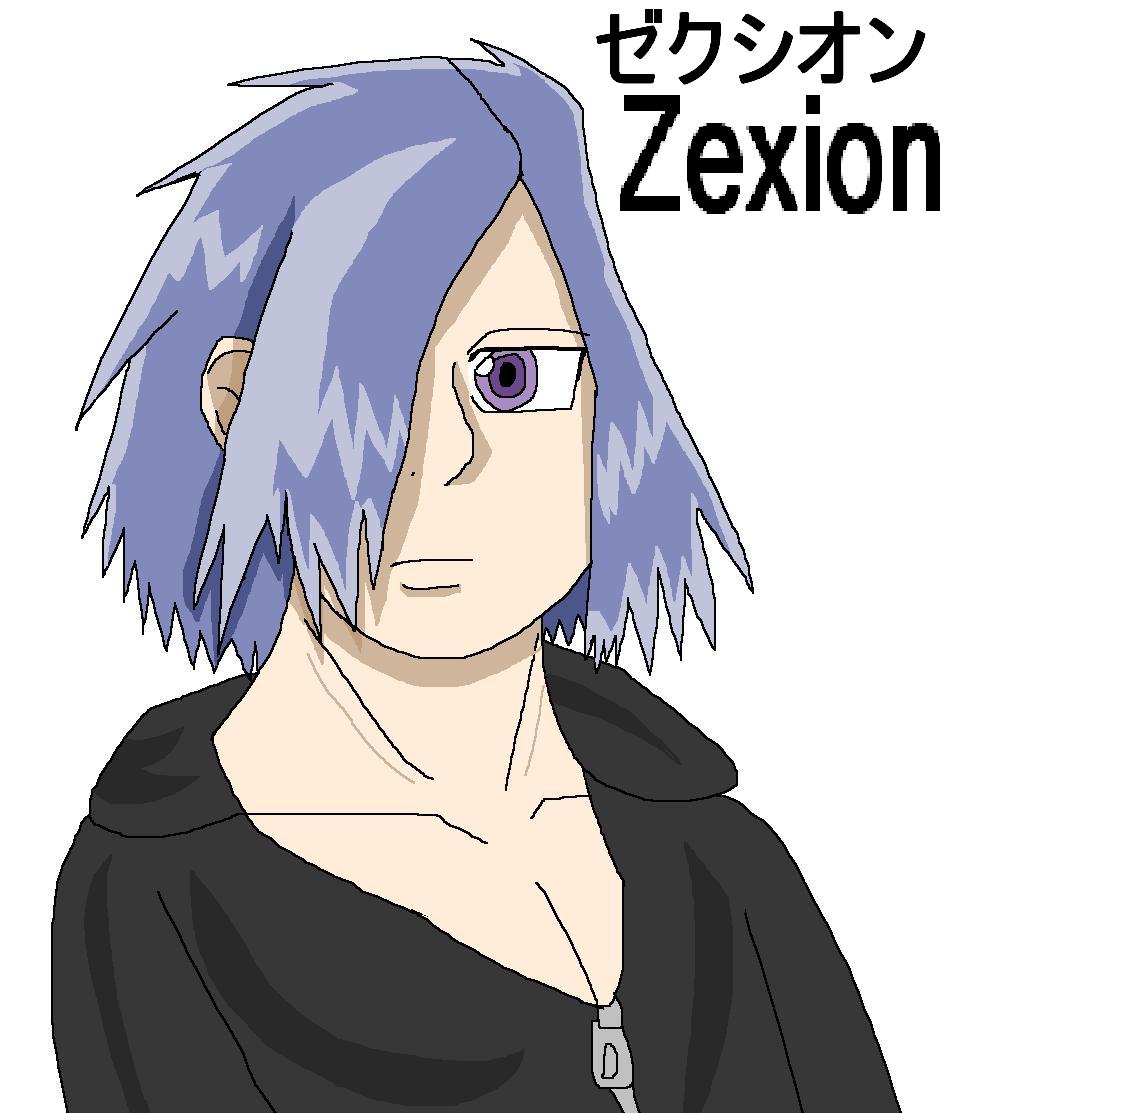 Zexion by nellmccror